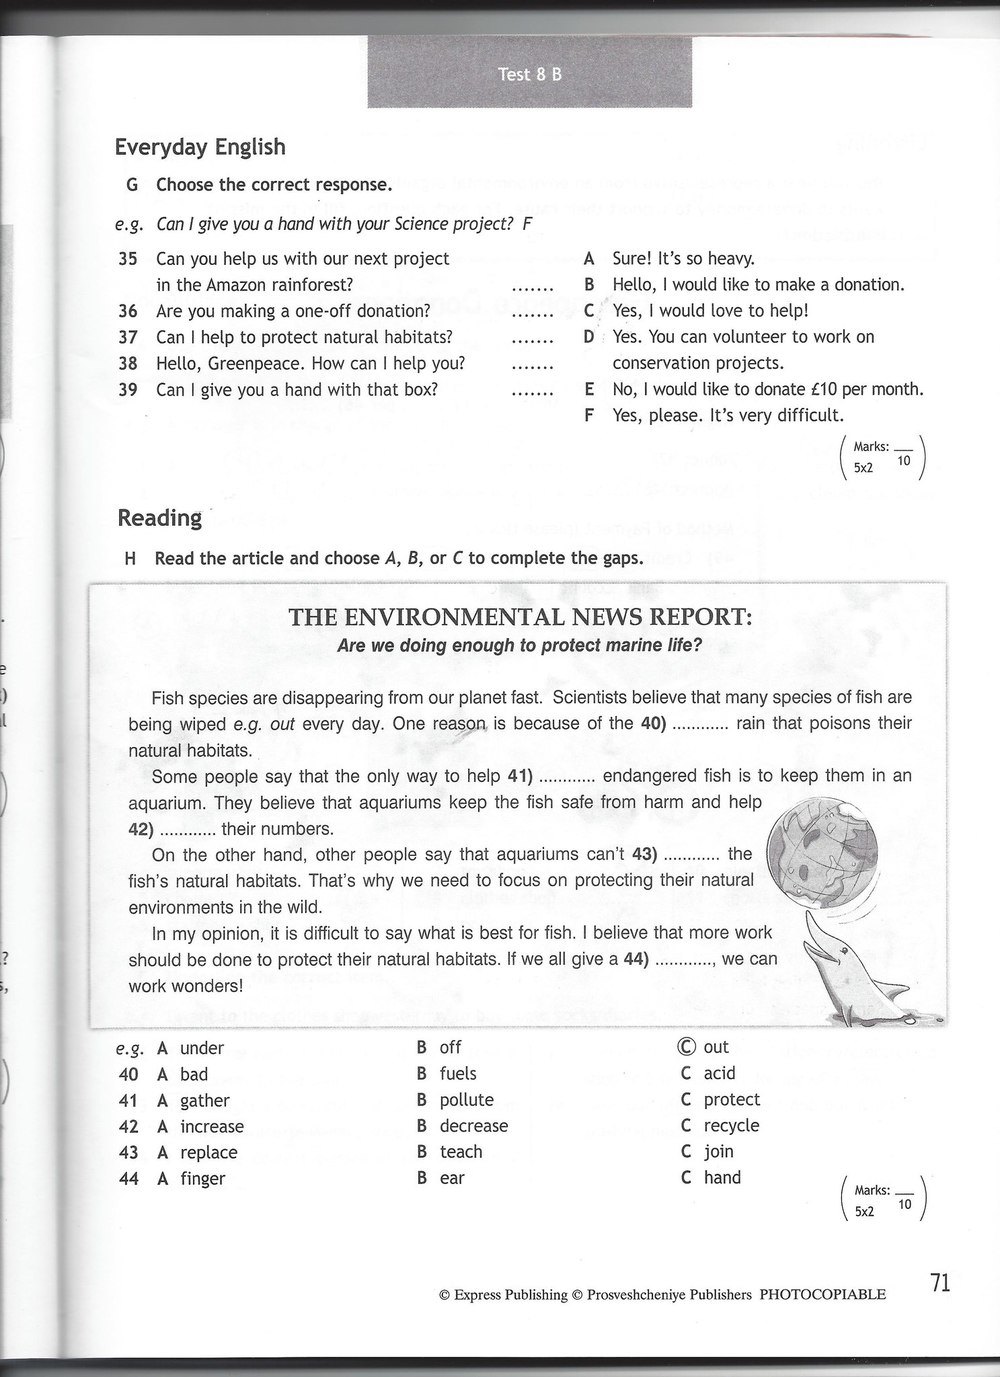 Test module 7 spotlight 7 класс ответы. Test booklet 7 класс Spotlight ваулина. Тест по английскому языку 7 класс Spotlight. Тесты спотлайт 7 класс ответы английский. Тест по английскому языку re 7 класс.